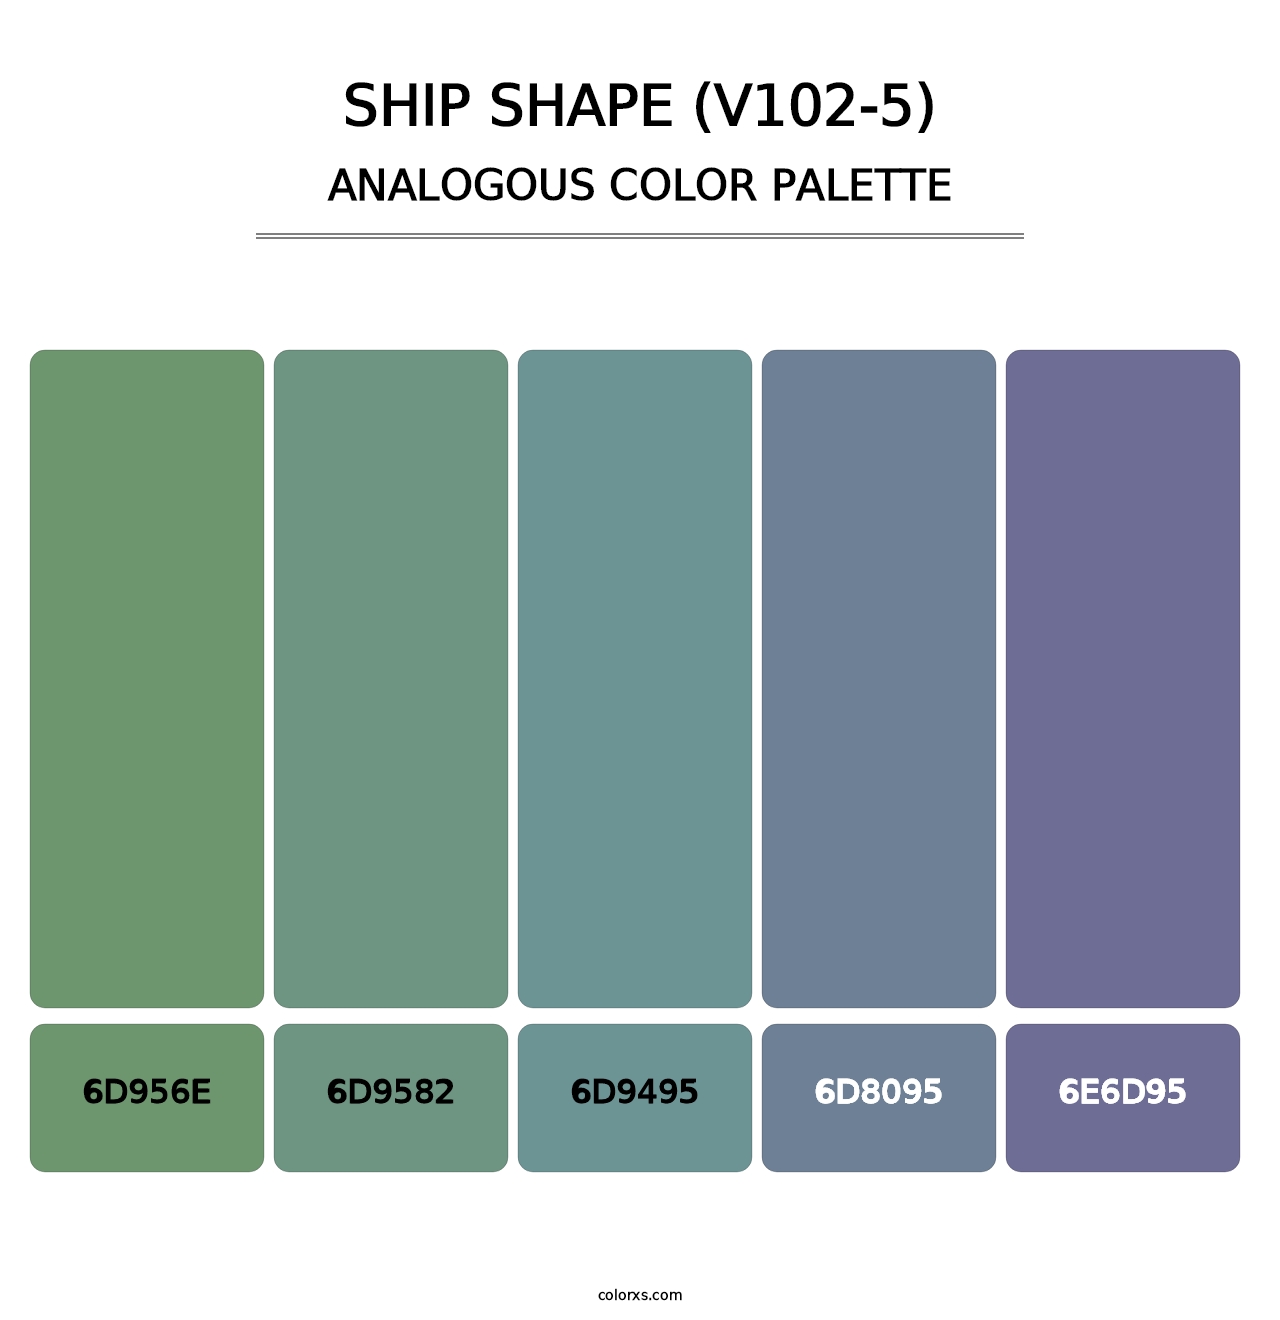 Ship Shape (V102-5) - Analogous Color Palette